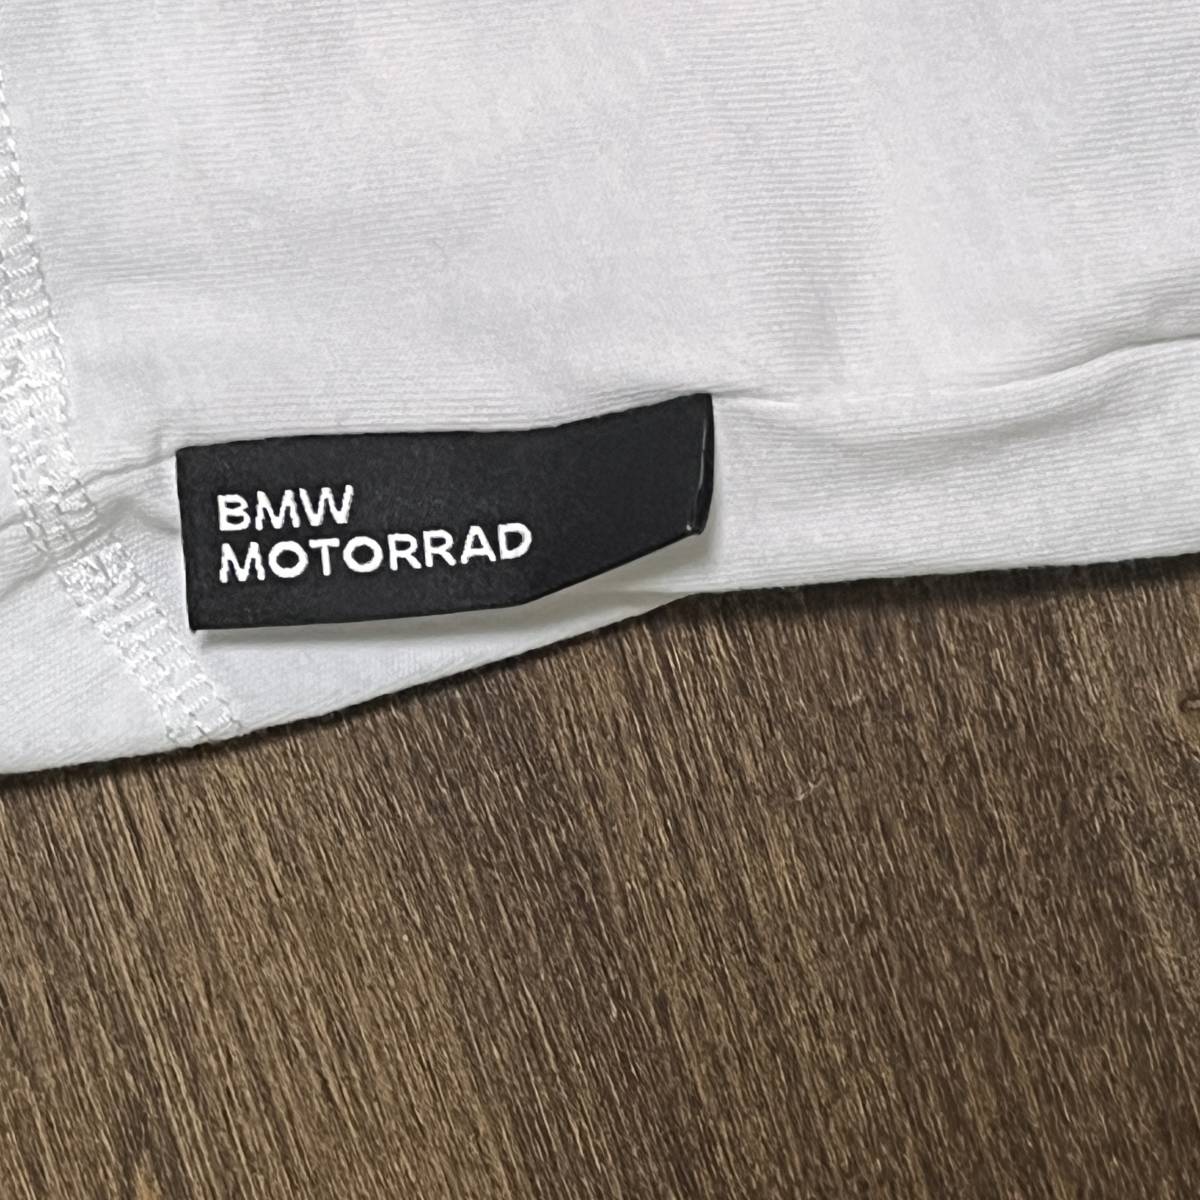 BMWmo традиции мотоцикл футболка BMW Motorrad shirt